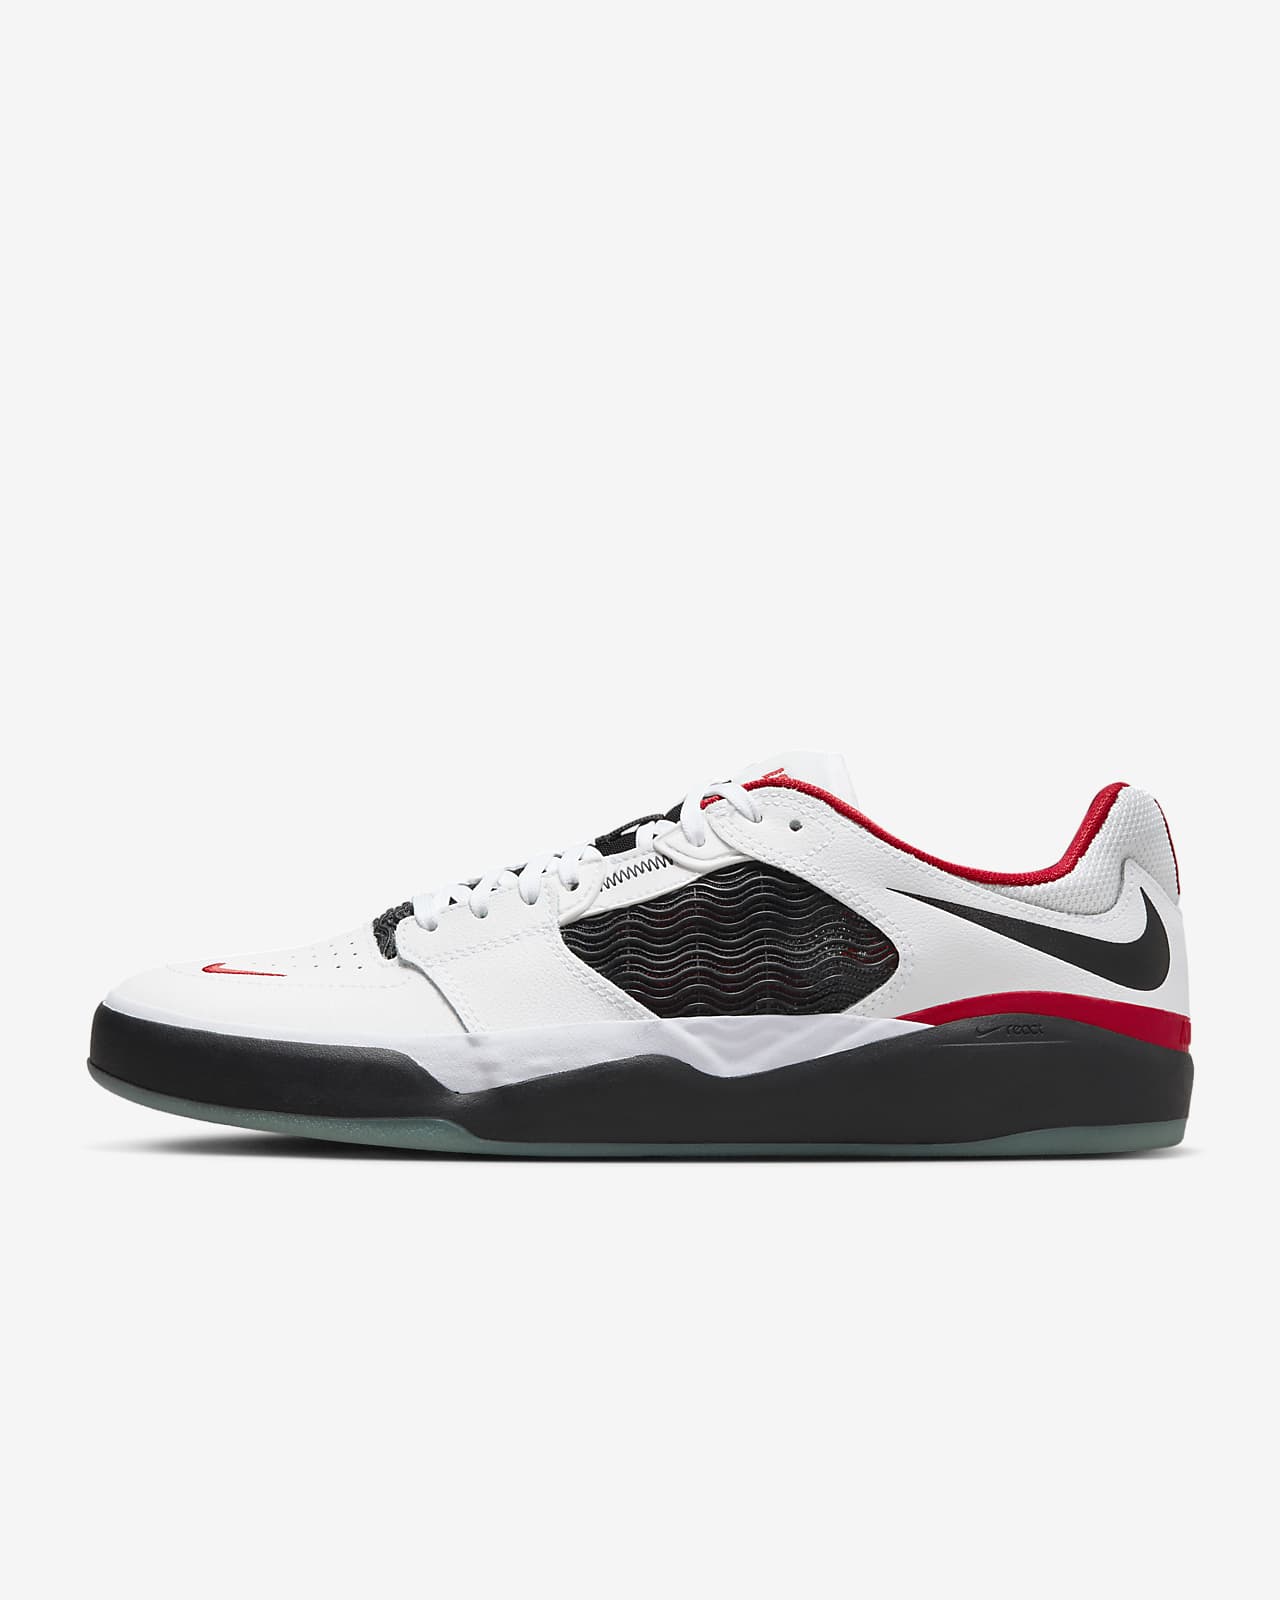 Nike SB Ishod Wair Premium Shoes. Nike NL